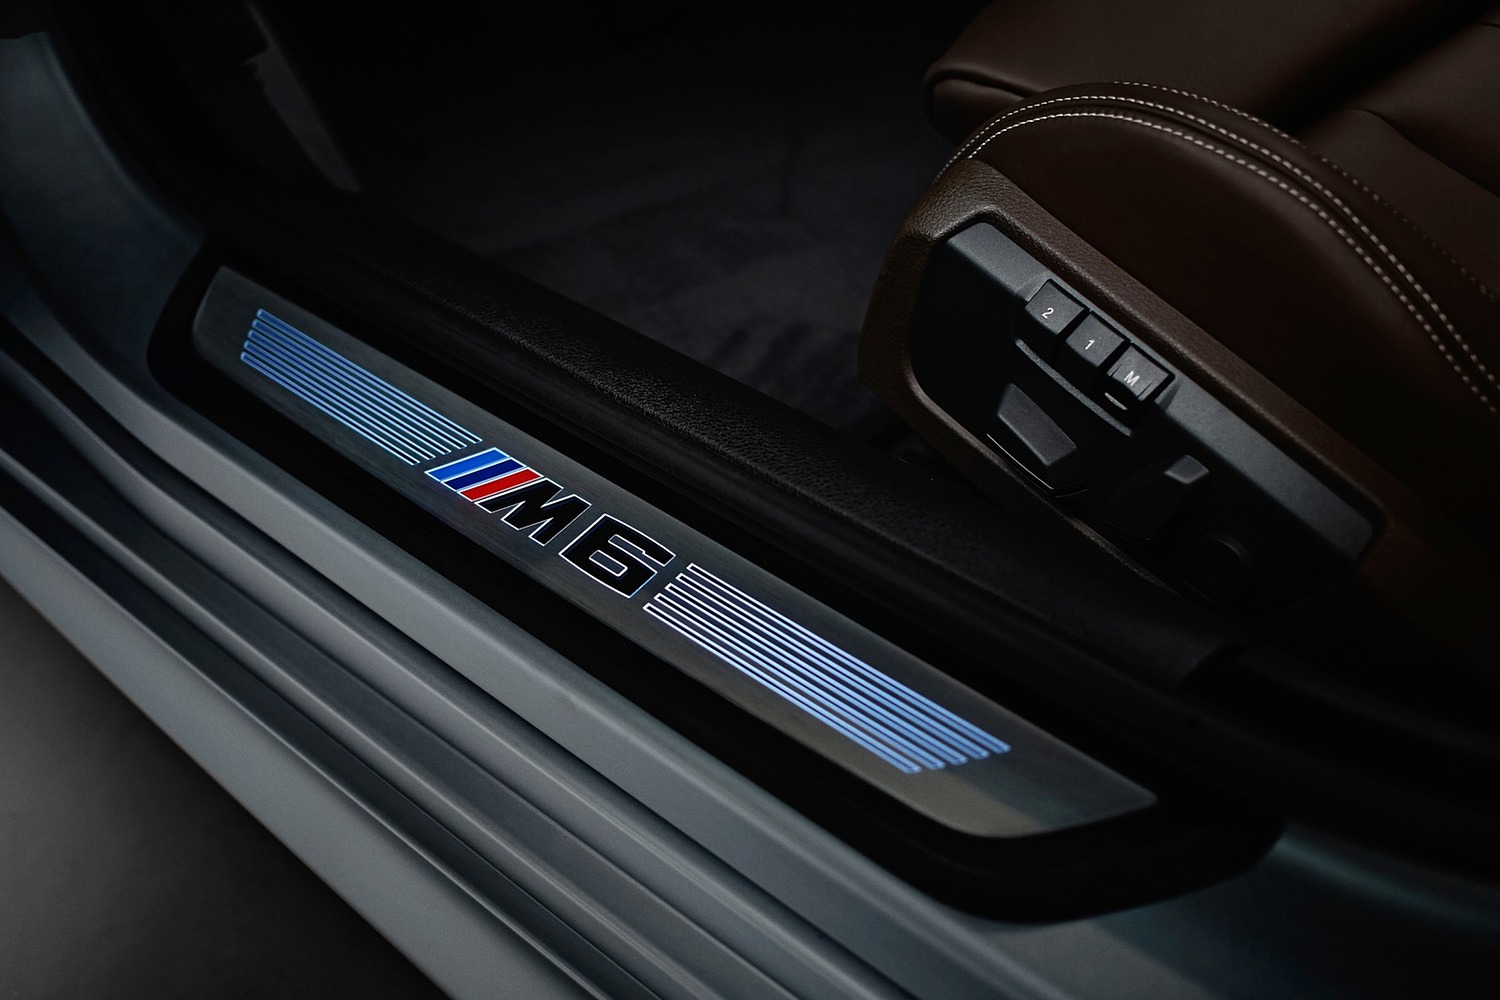 BMW M6 Gran Coupe Sedan Interior Detail (2017 model year shown)